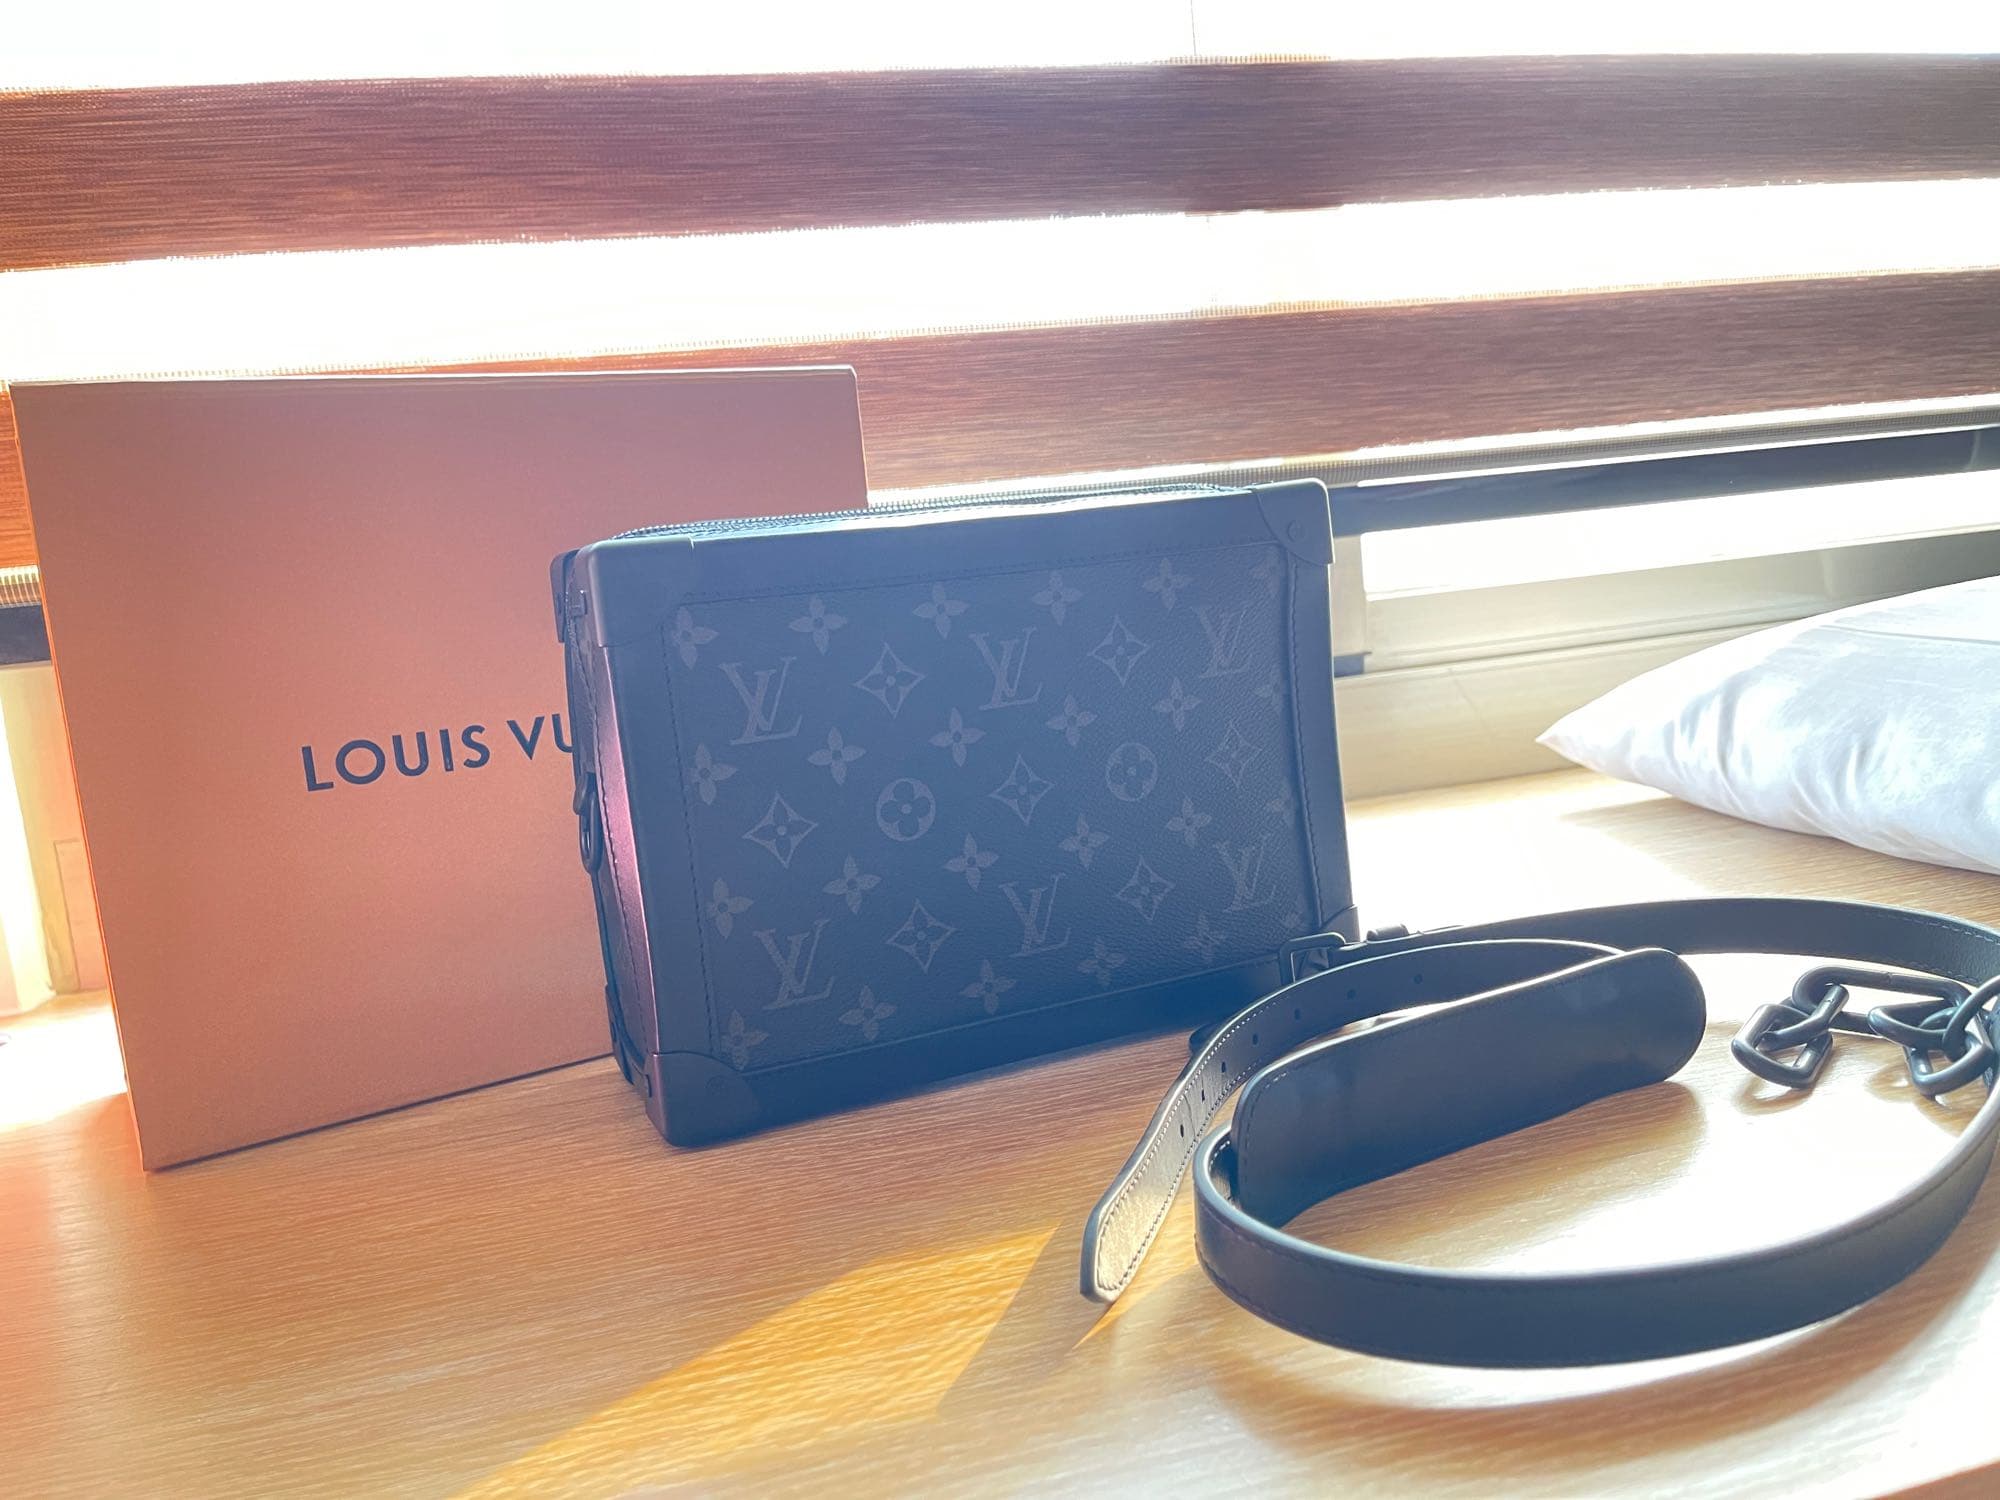 Louis Vuitton Mini Soft Trunk $3500 by KimberleeHillner on DeviantArt